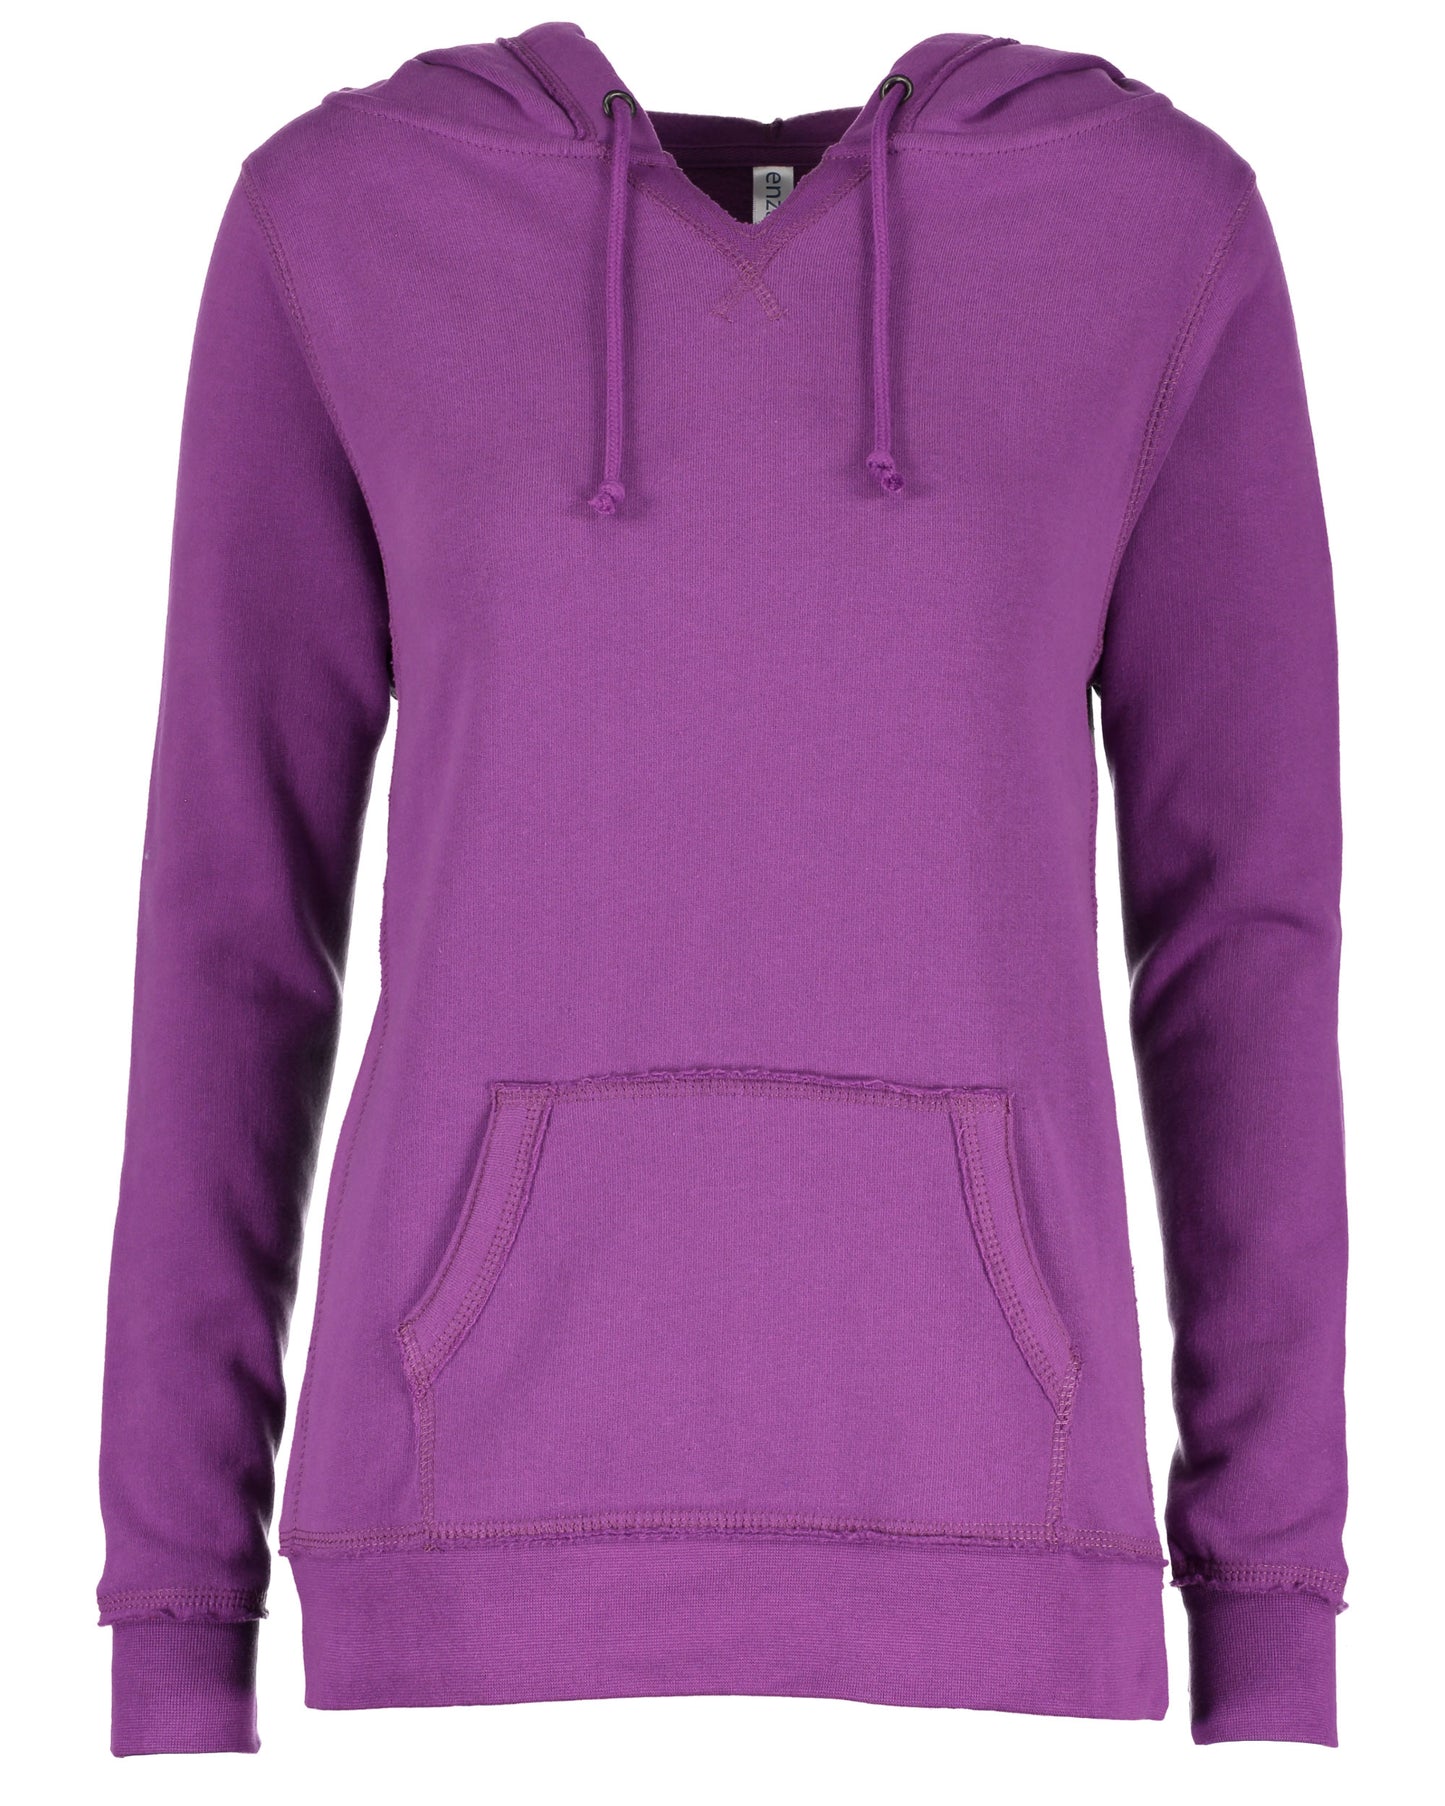 HBPC Enza® Ladies V-Notch Fleece Pullover Hood EZ395